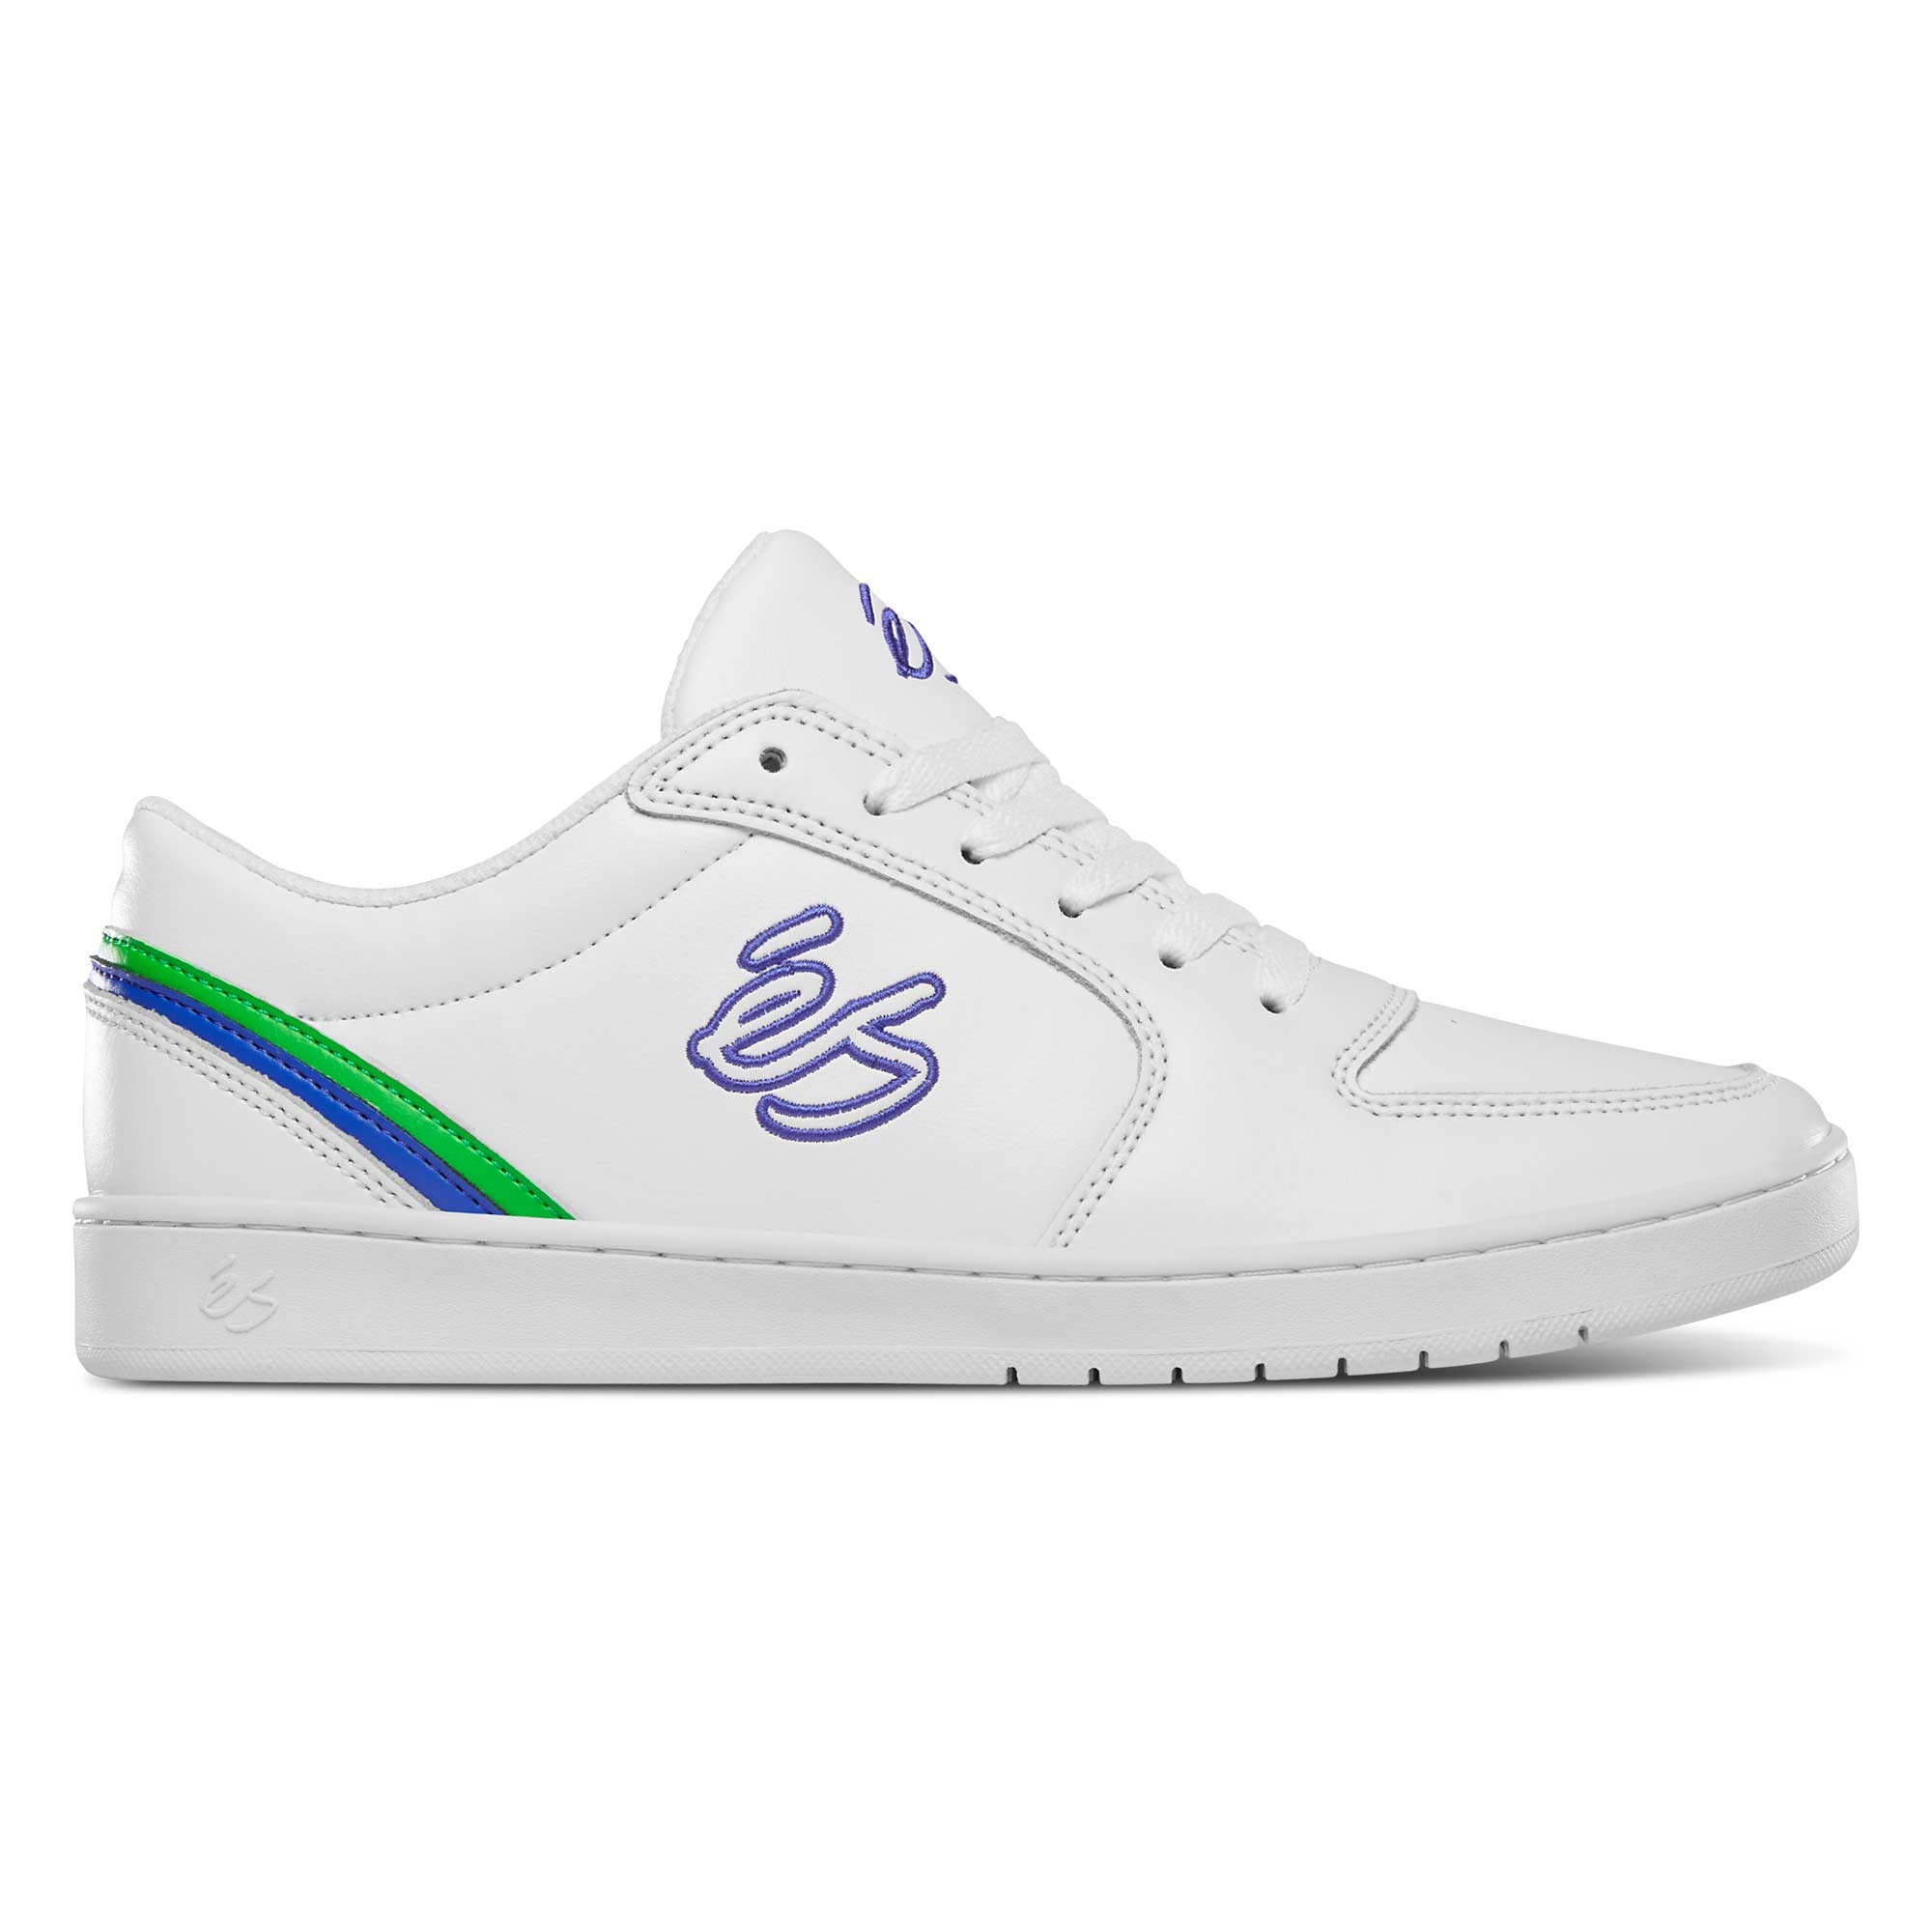 eS SKB Shoe EOS whi/blu/gre, white/blue/green